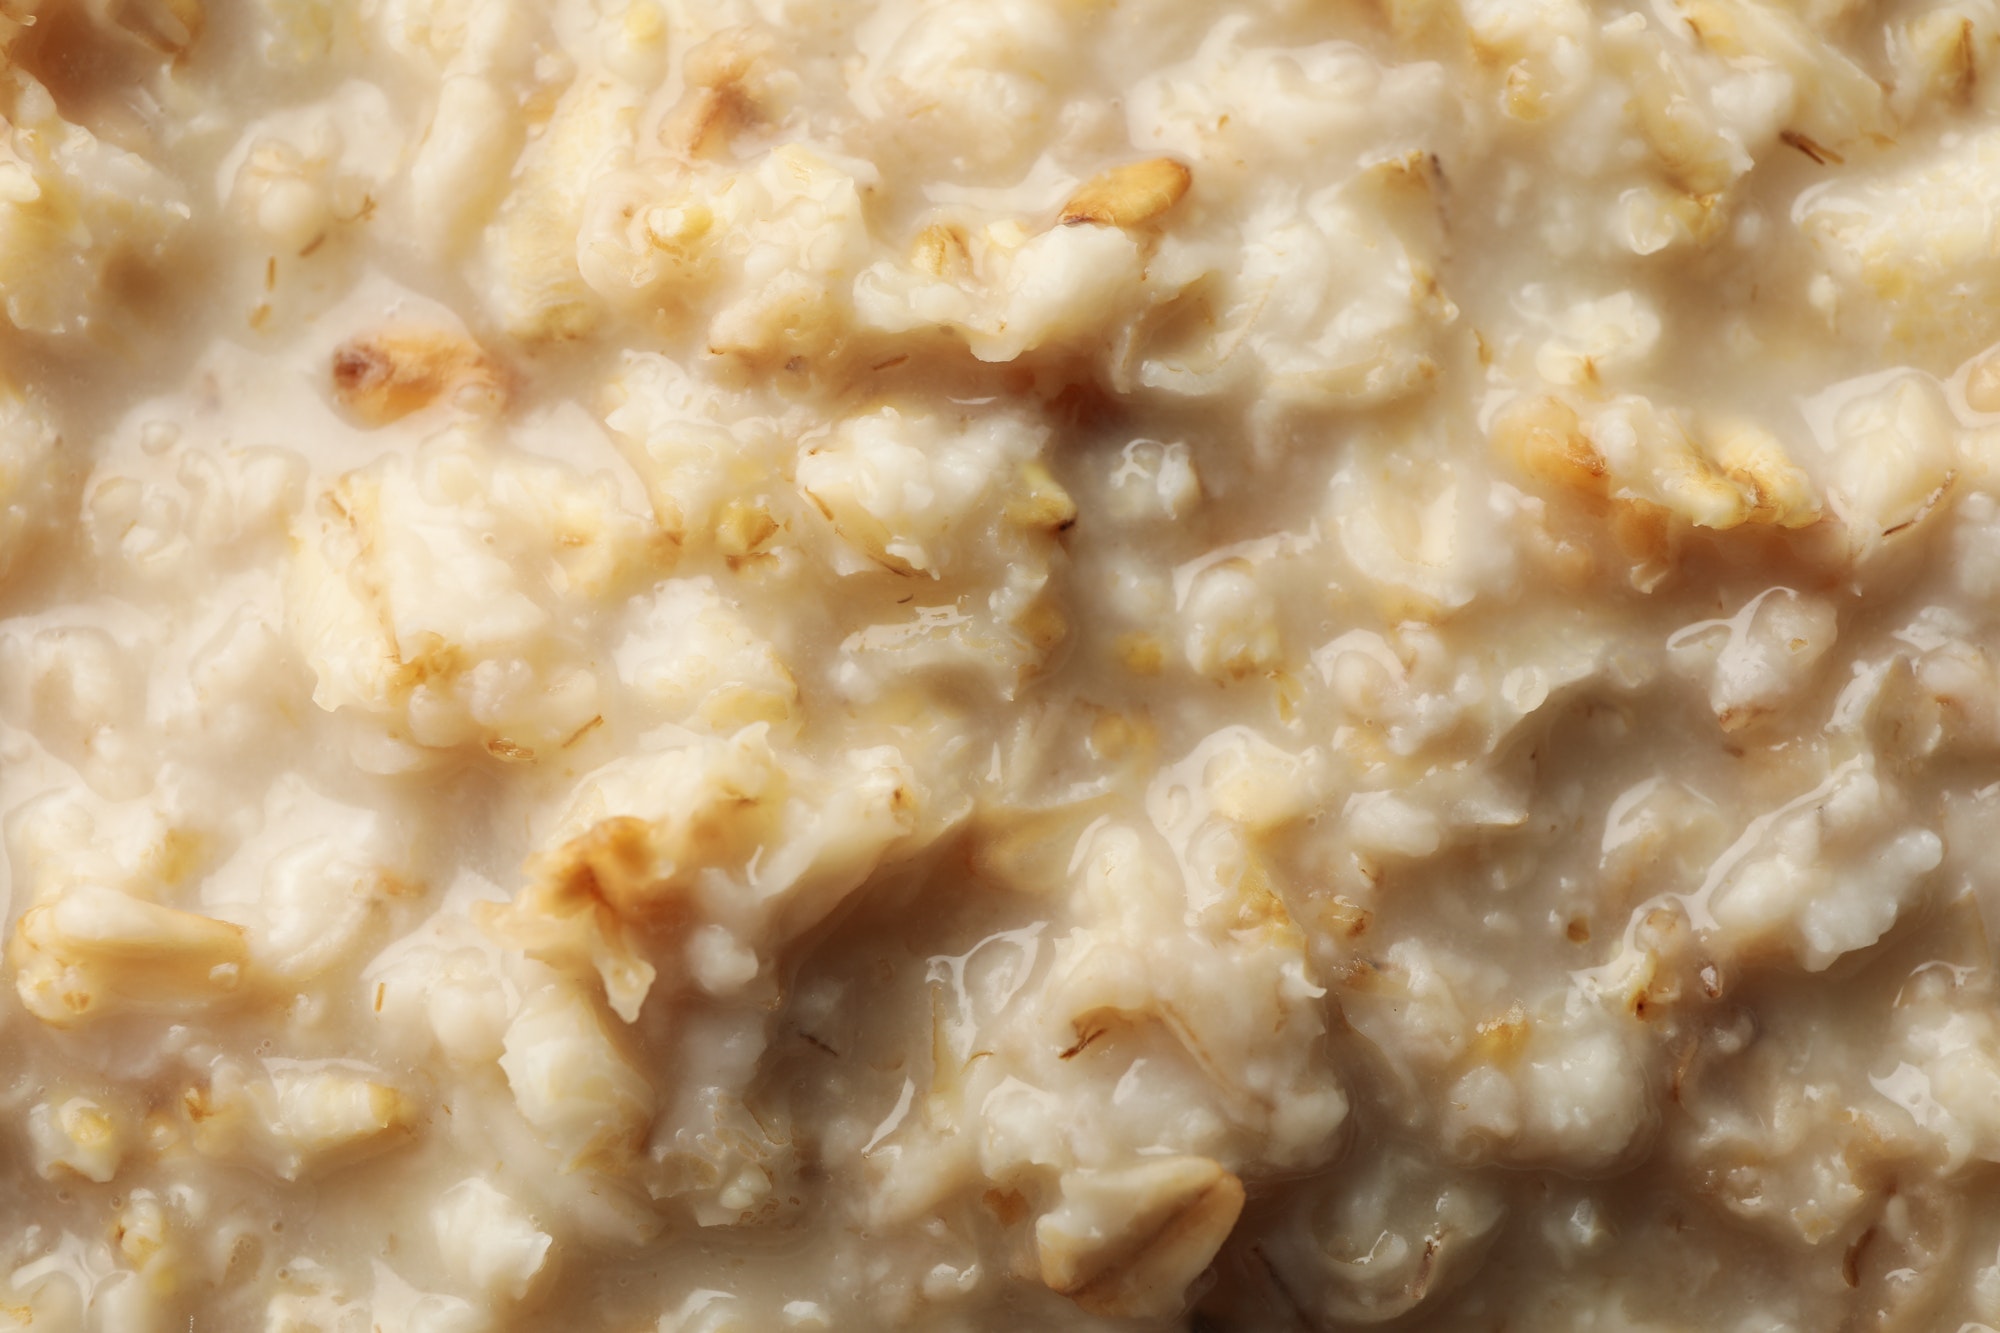 Oatmeal porridge texture on whole background, close up